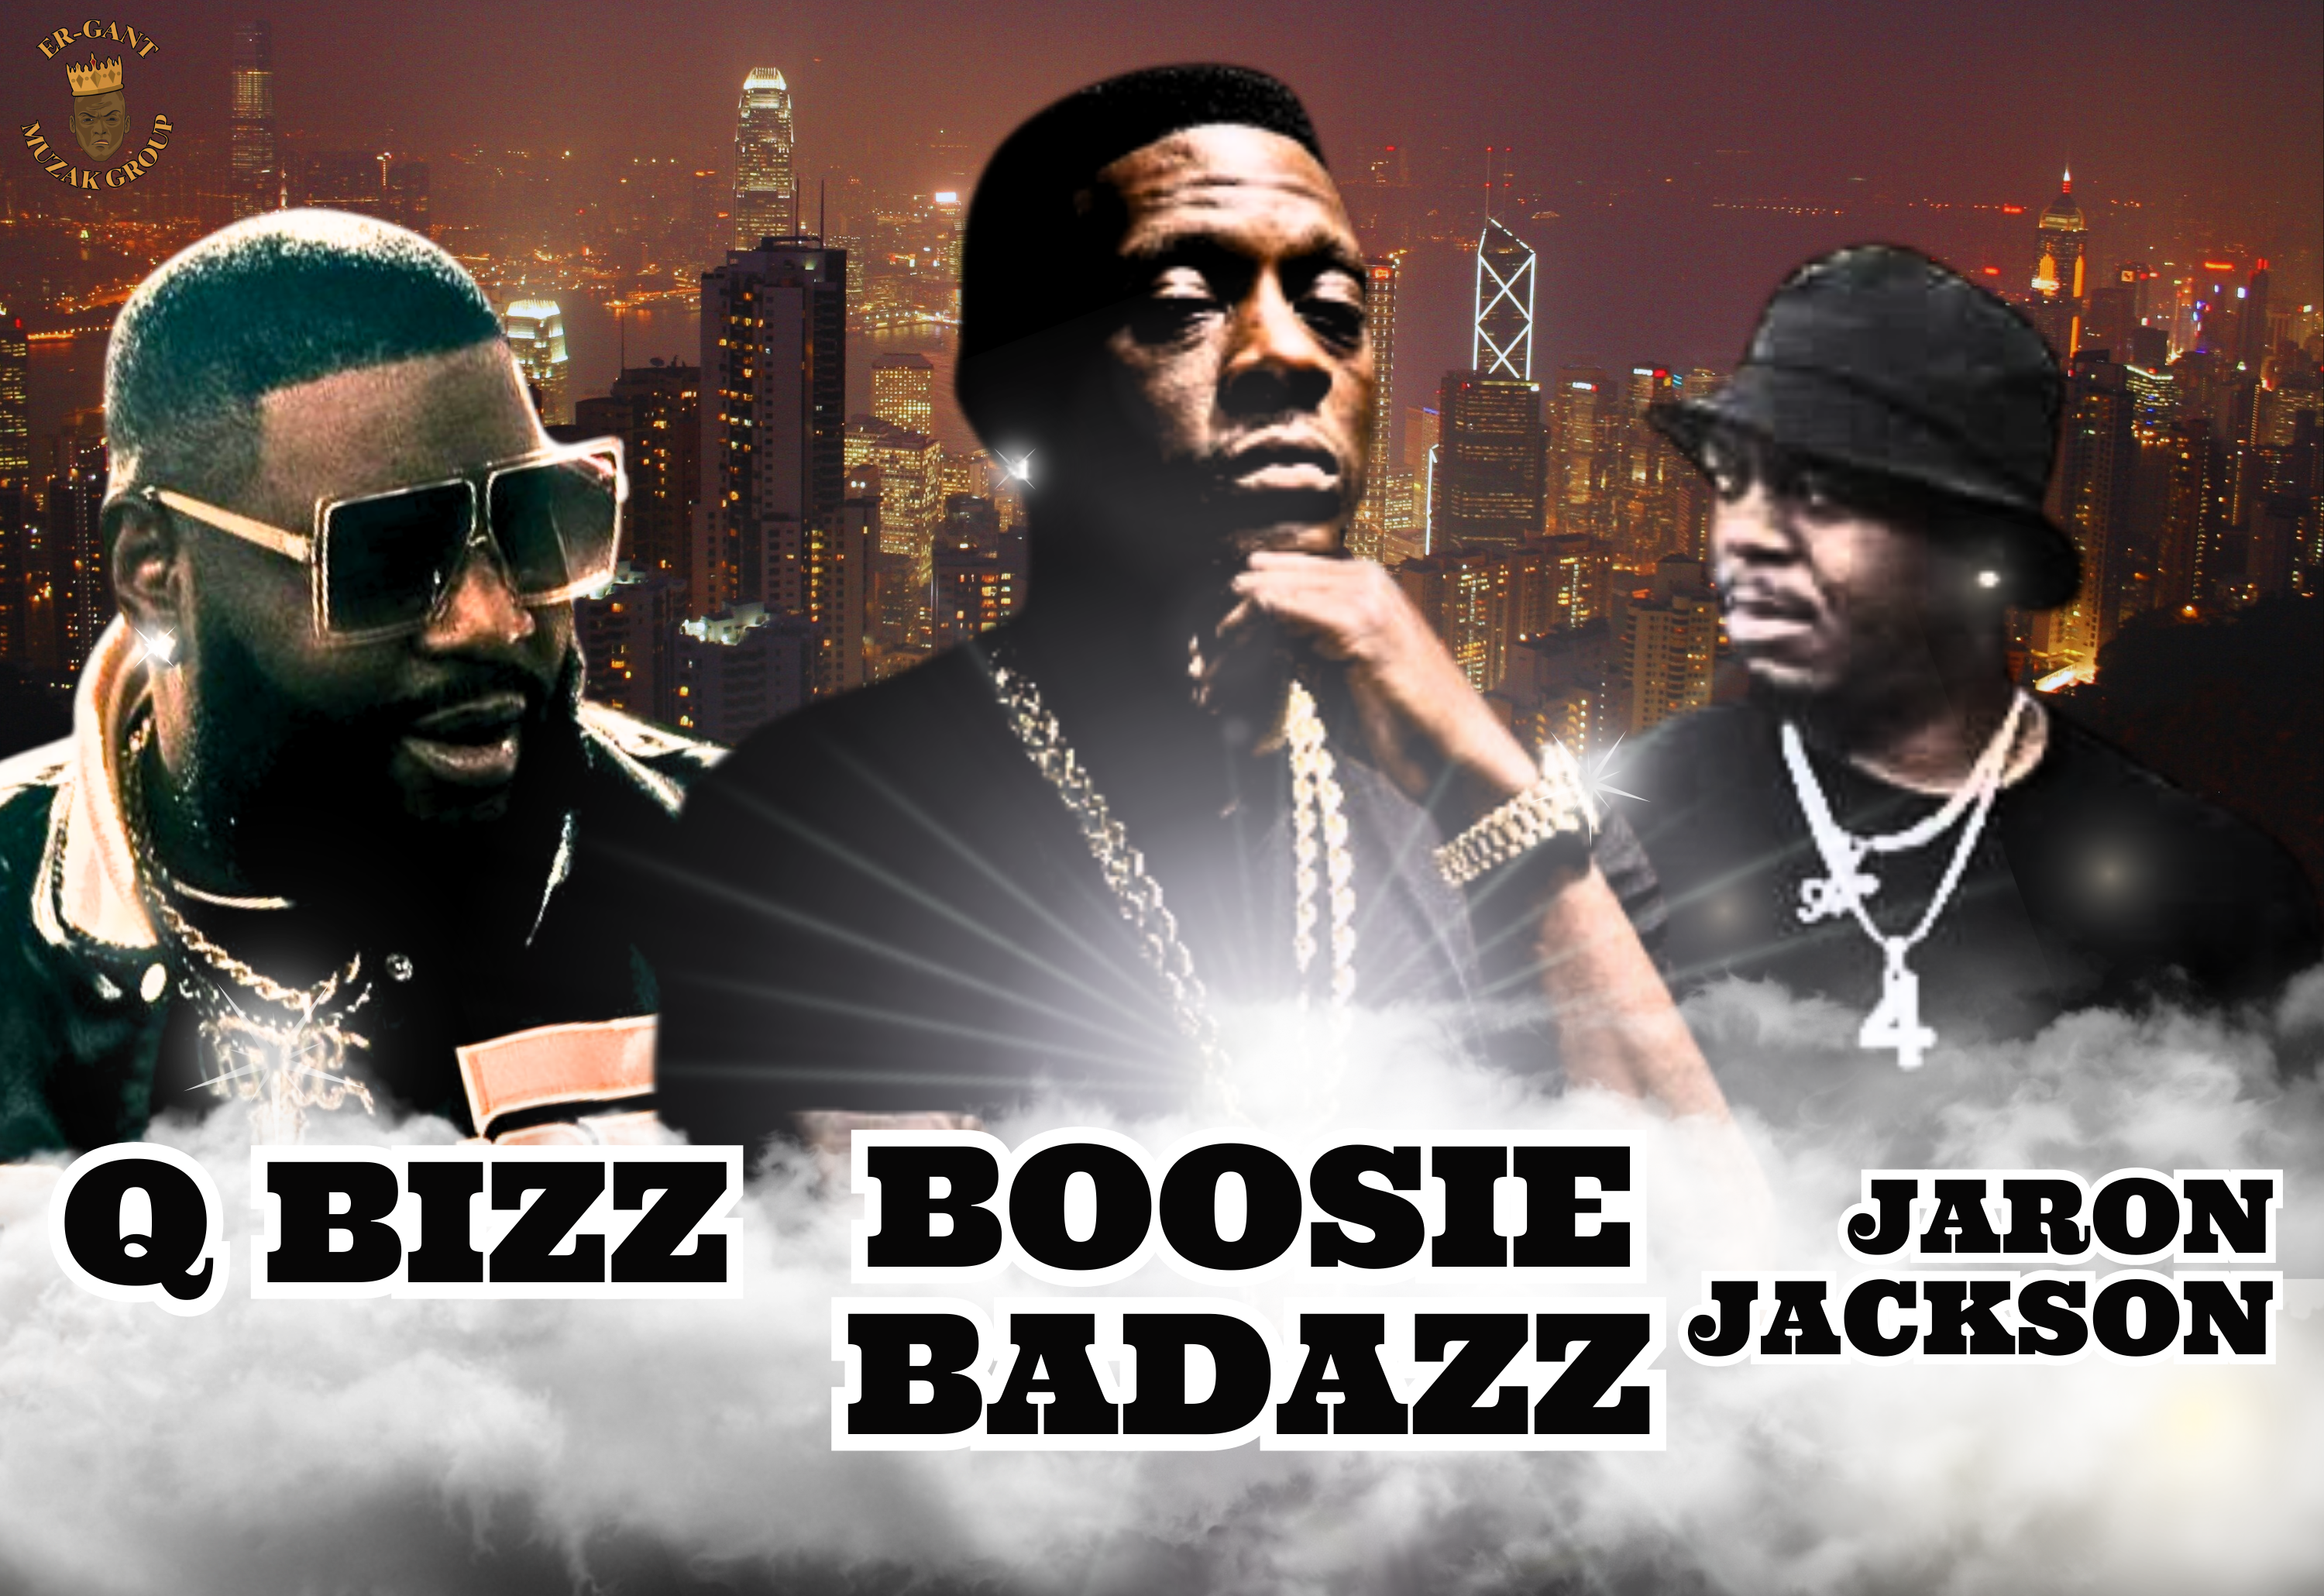 Boosie Badazz Praises Kentucky's Rising Star: Q Bizz's 'Amazing' in Latest Hit Collaboration